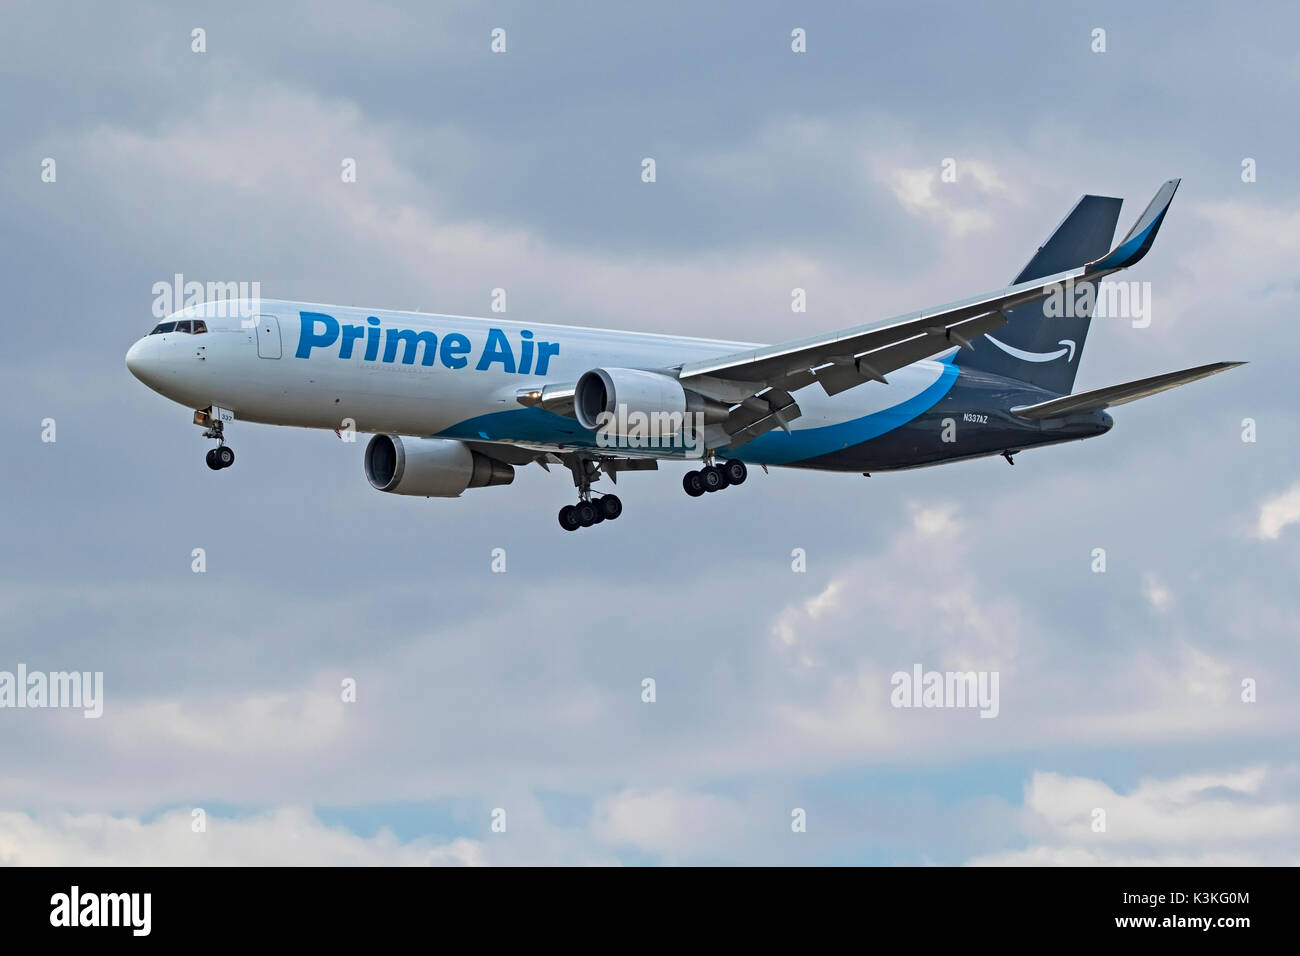 Amazon prime air -Fotos und -Bildmaterial in hoher Auflösung – Alamy